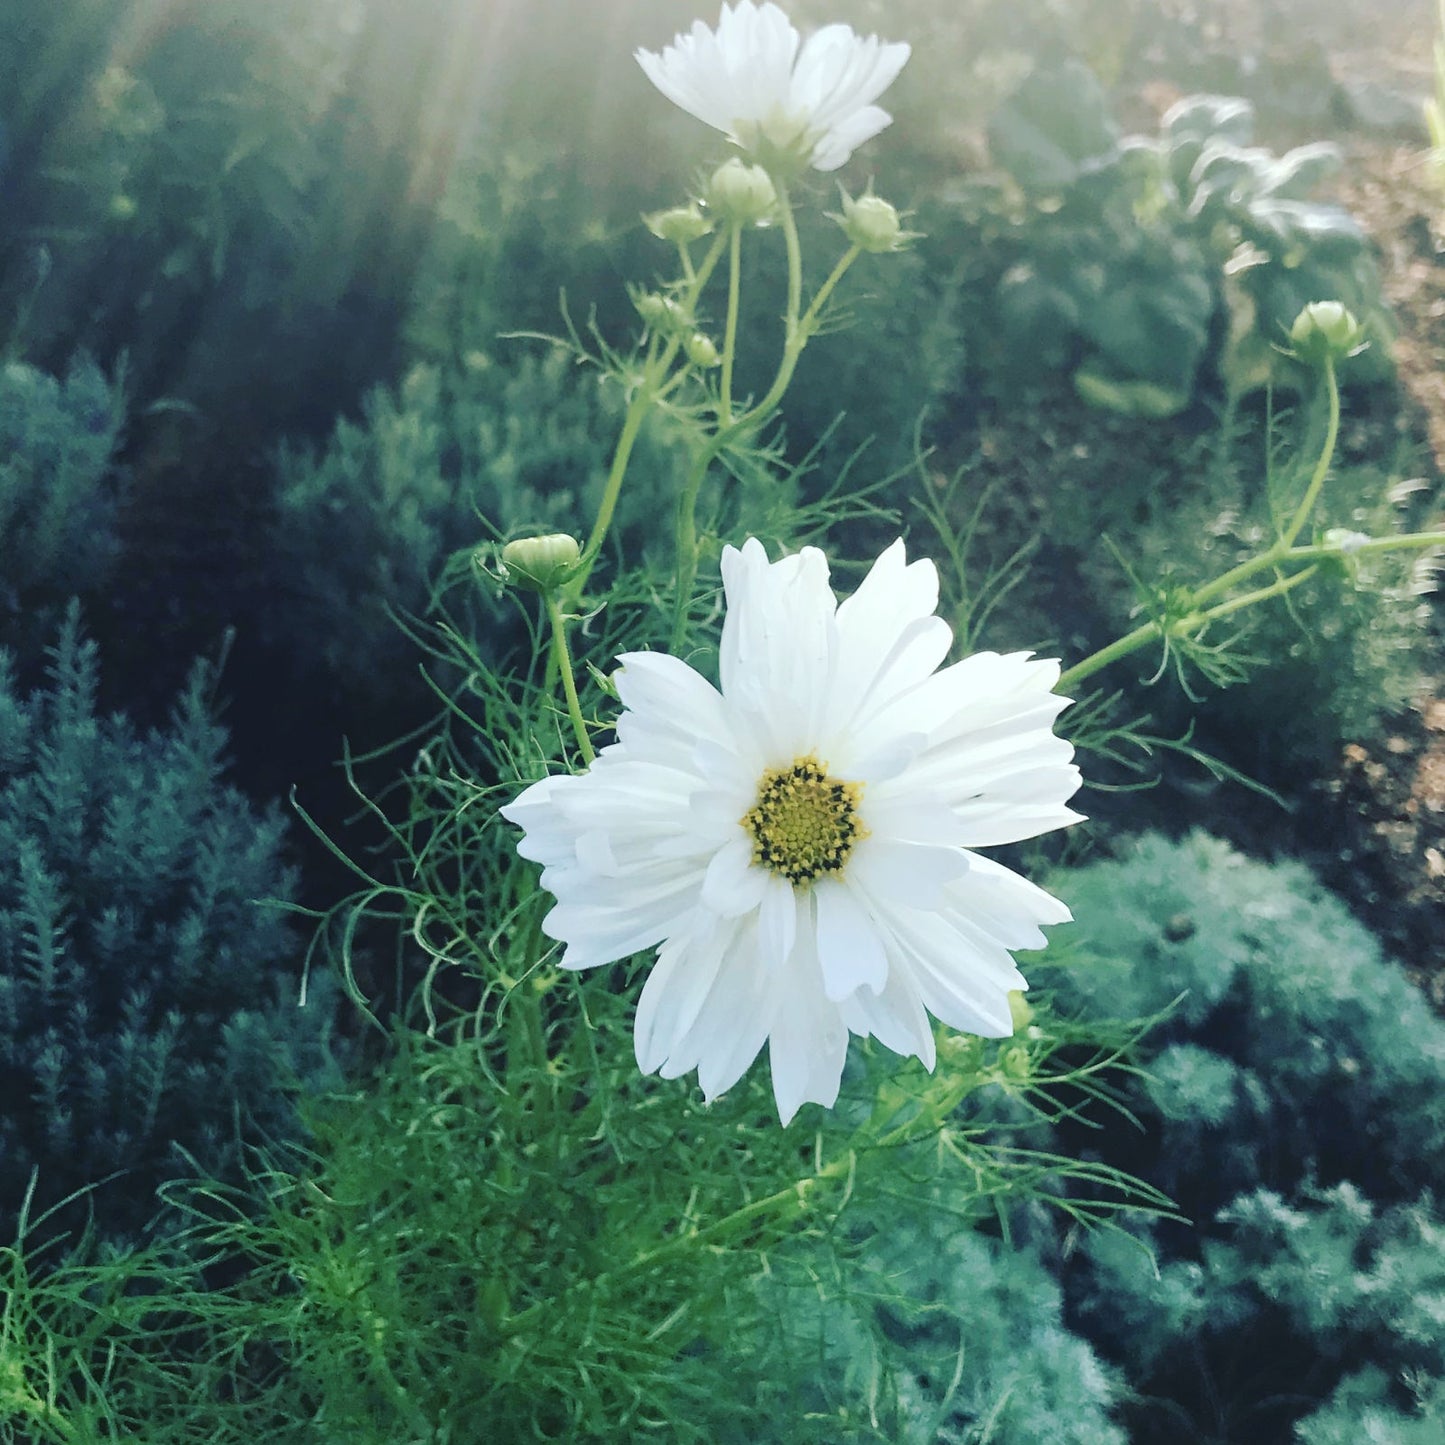 White Cosmos in the summer garden